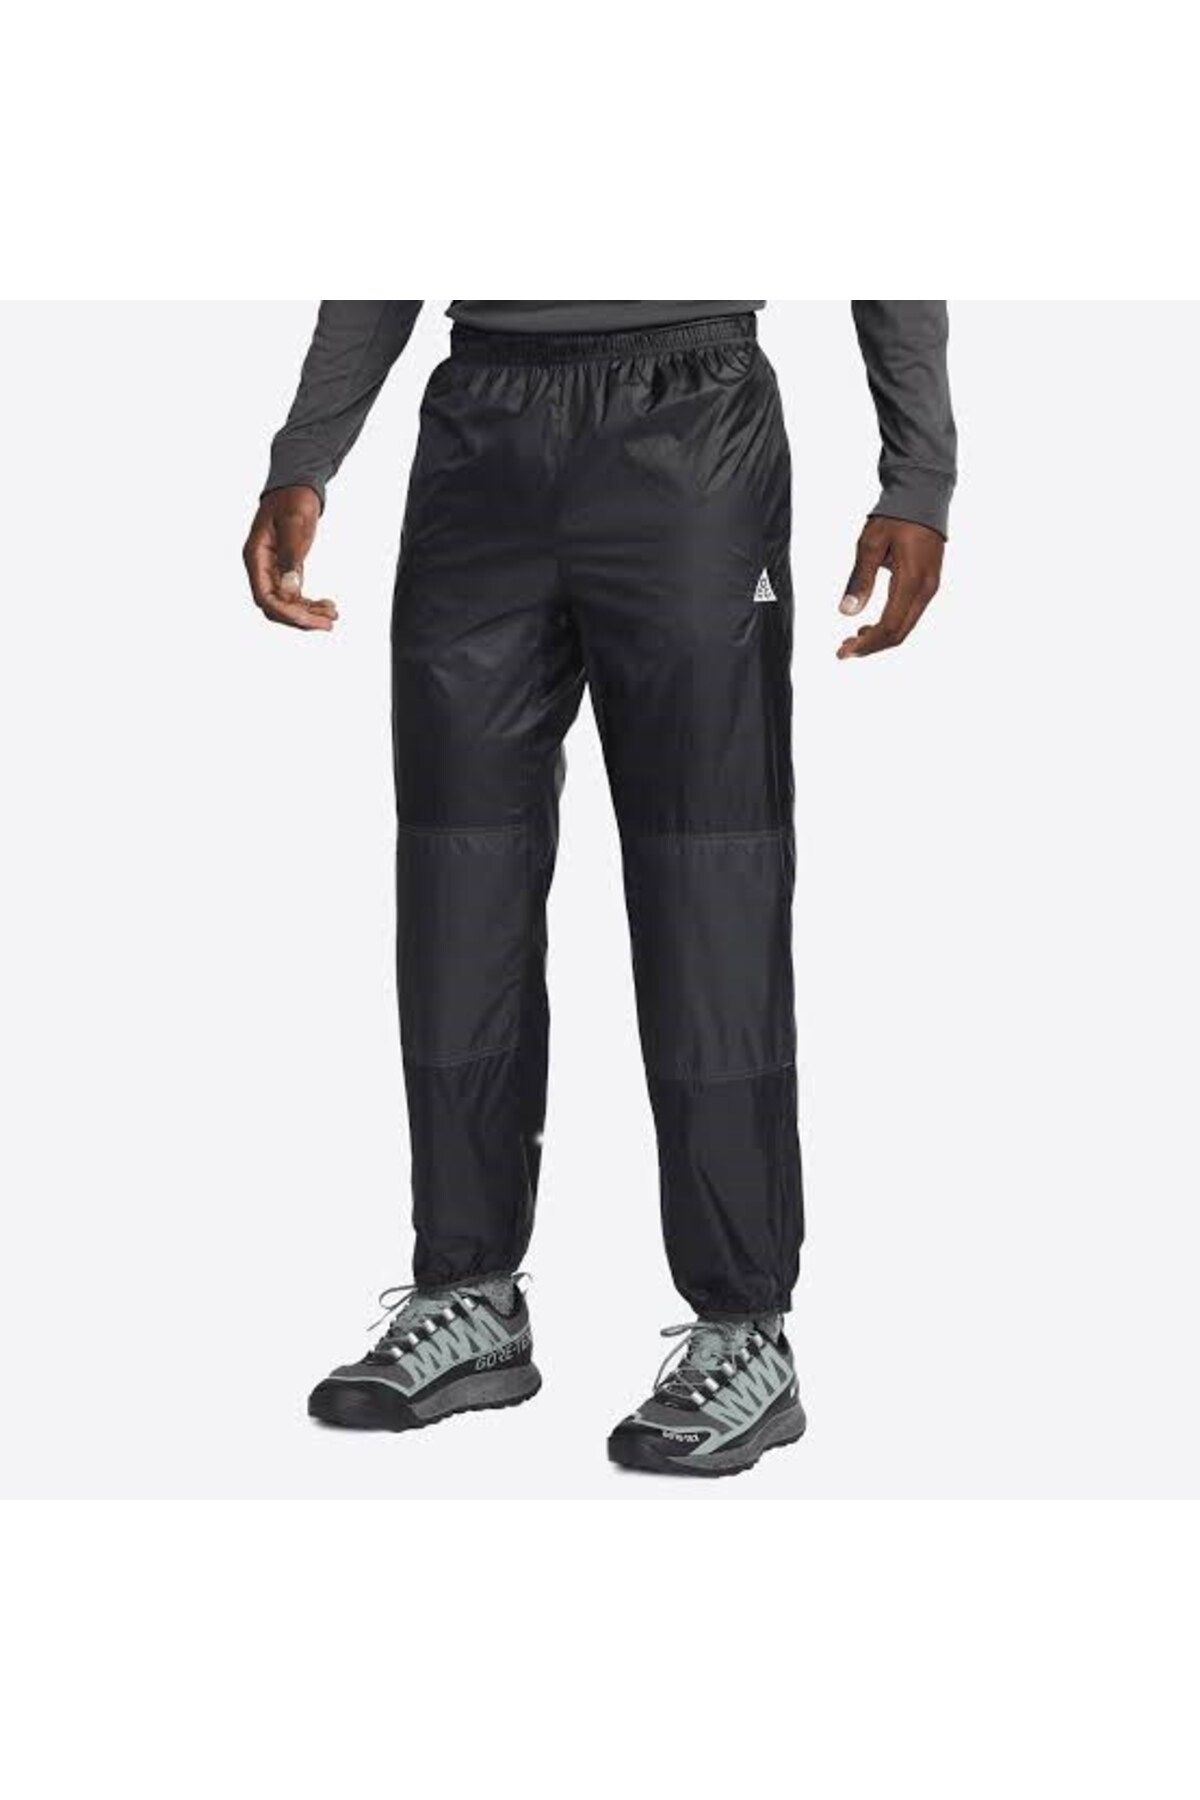 Nike ACG Cinder Cone Windshell Pants Black (DB1134-045